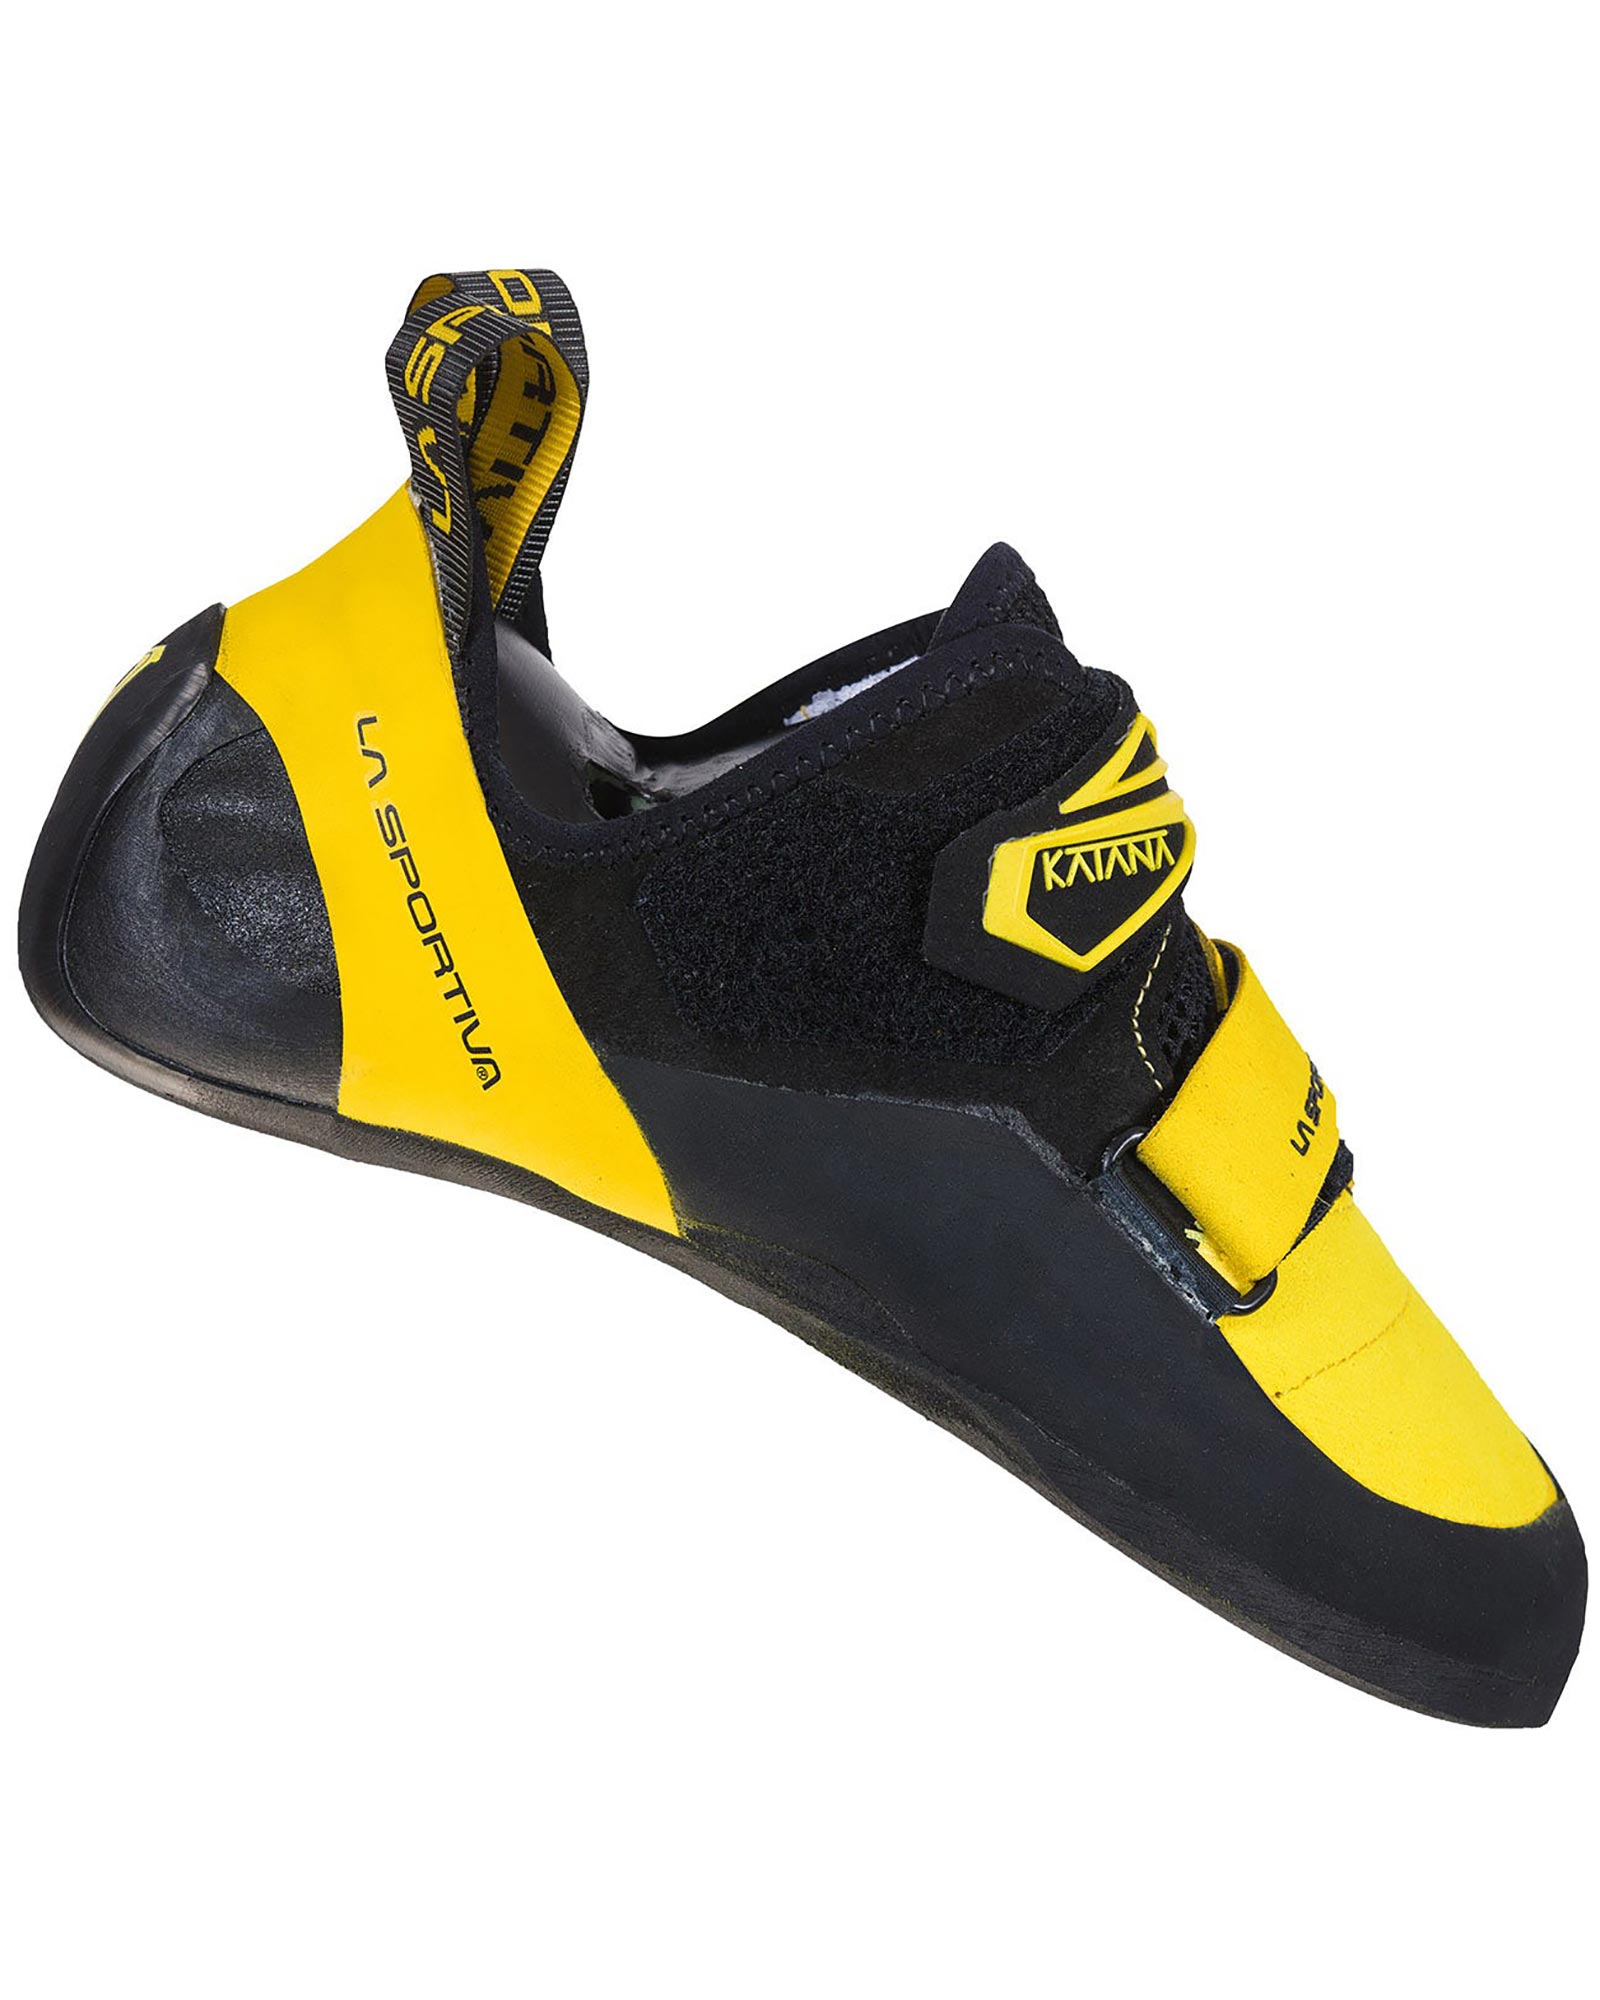 La Sportiva Katana Men’s Shoes - Yellow/Black EU 40